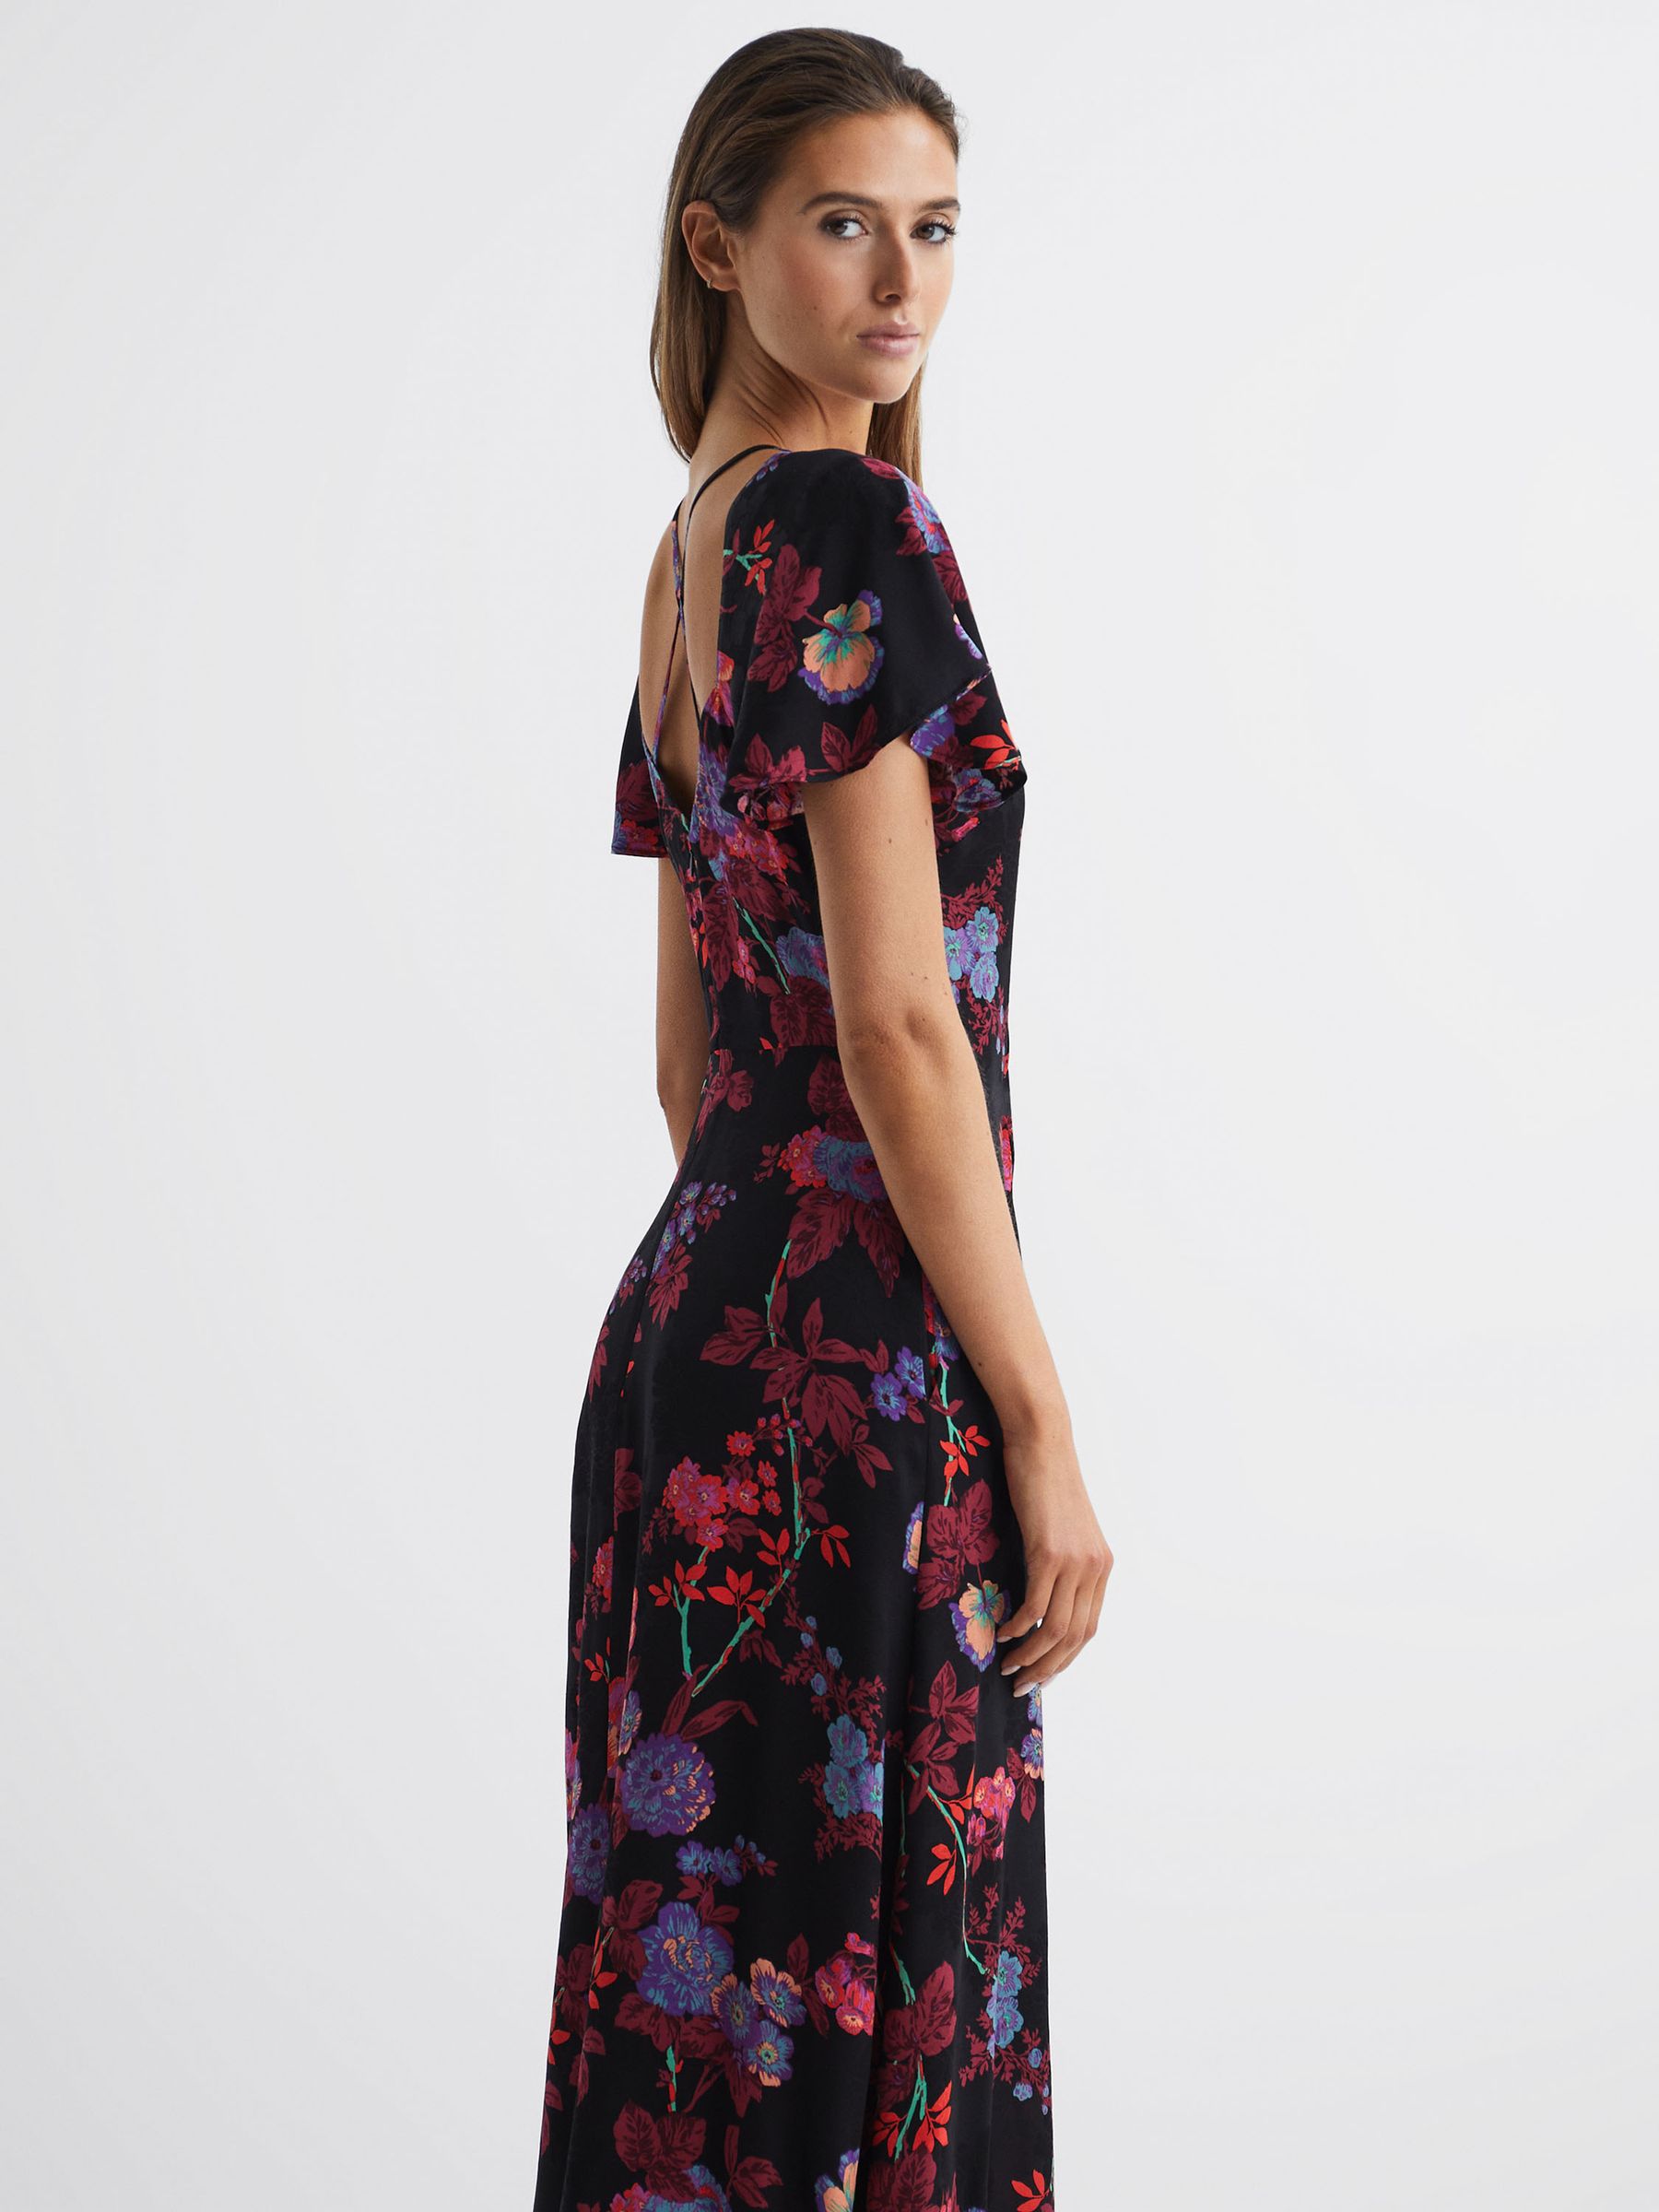 Reiss Leni Fitted Floral Print Midi Dress | REISS USA